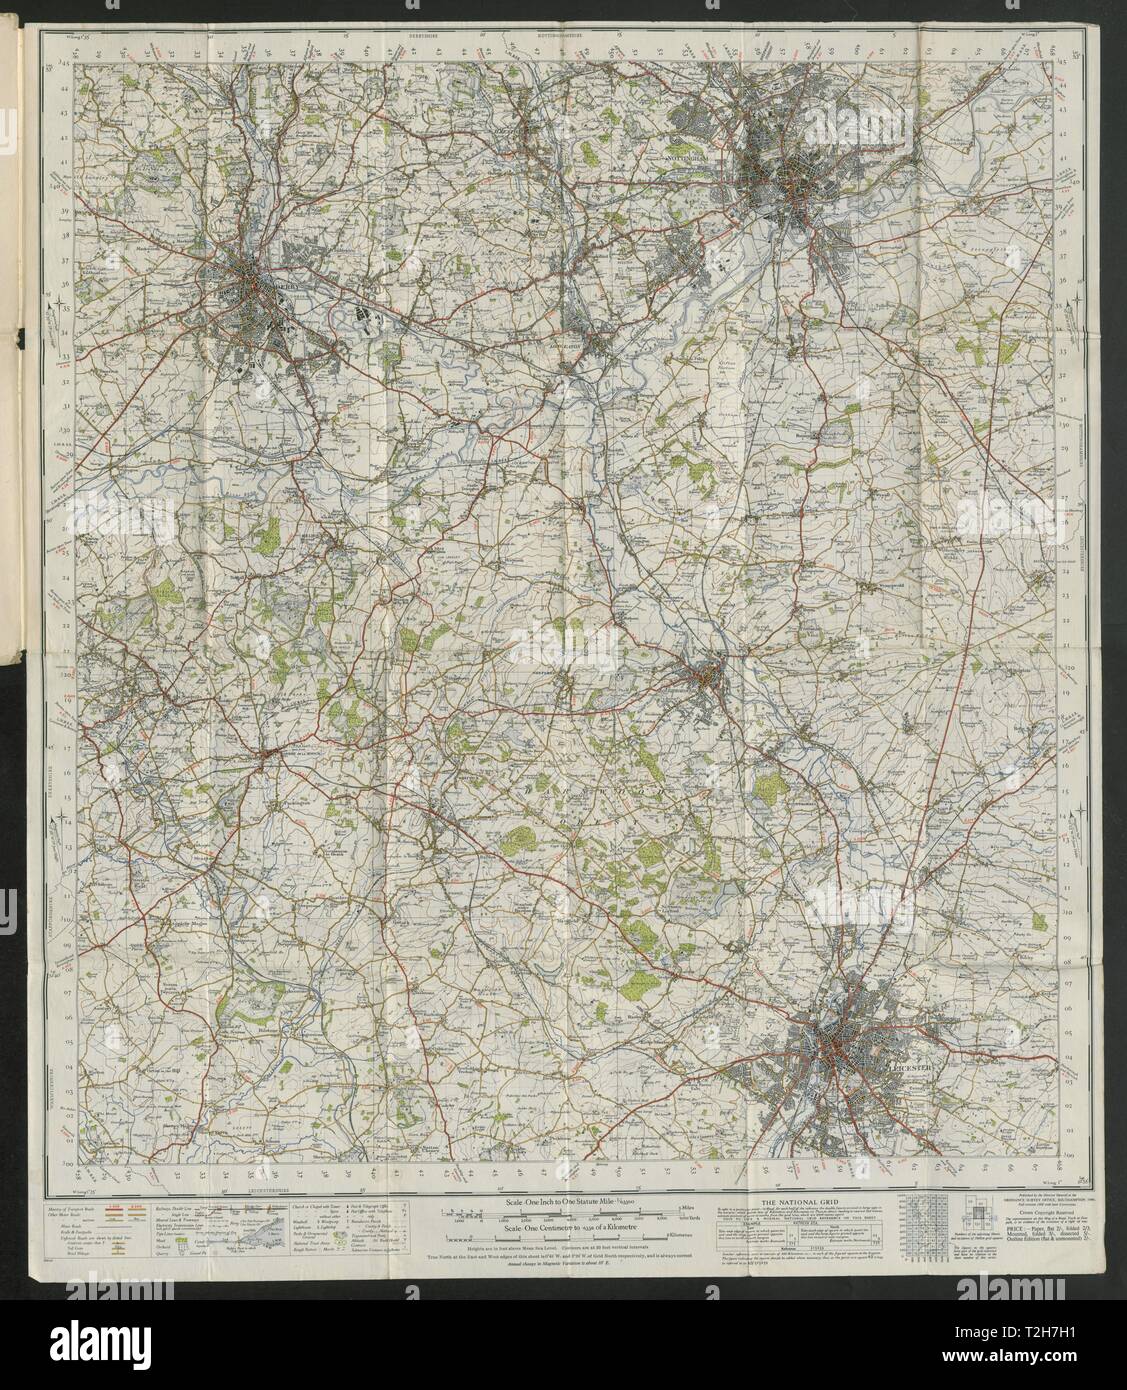 Derby Nottingham Leicester Sheet 121 East Midlands ORDNANCE SURVEY 1946 map Stock Photo